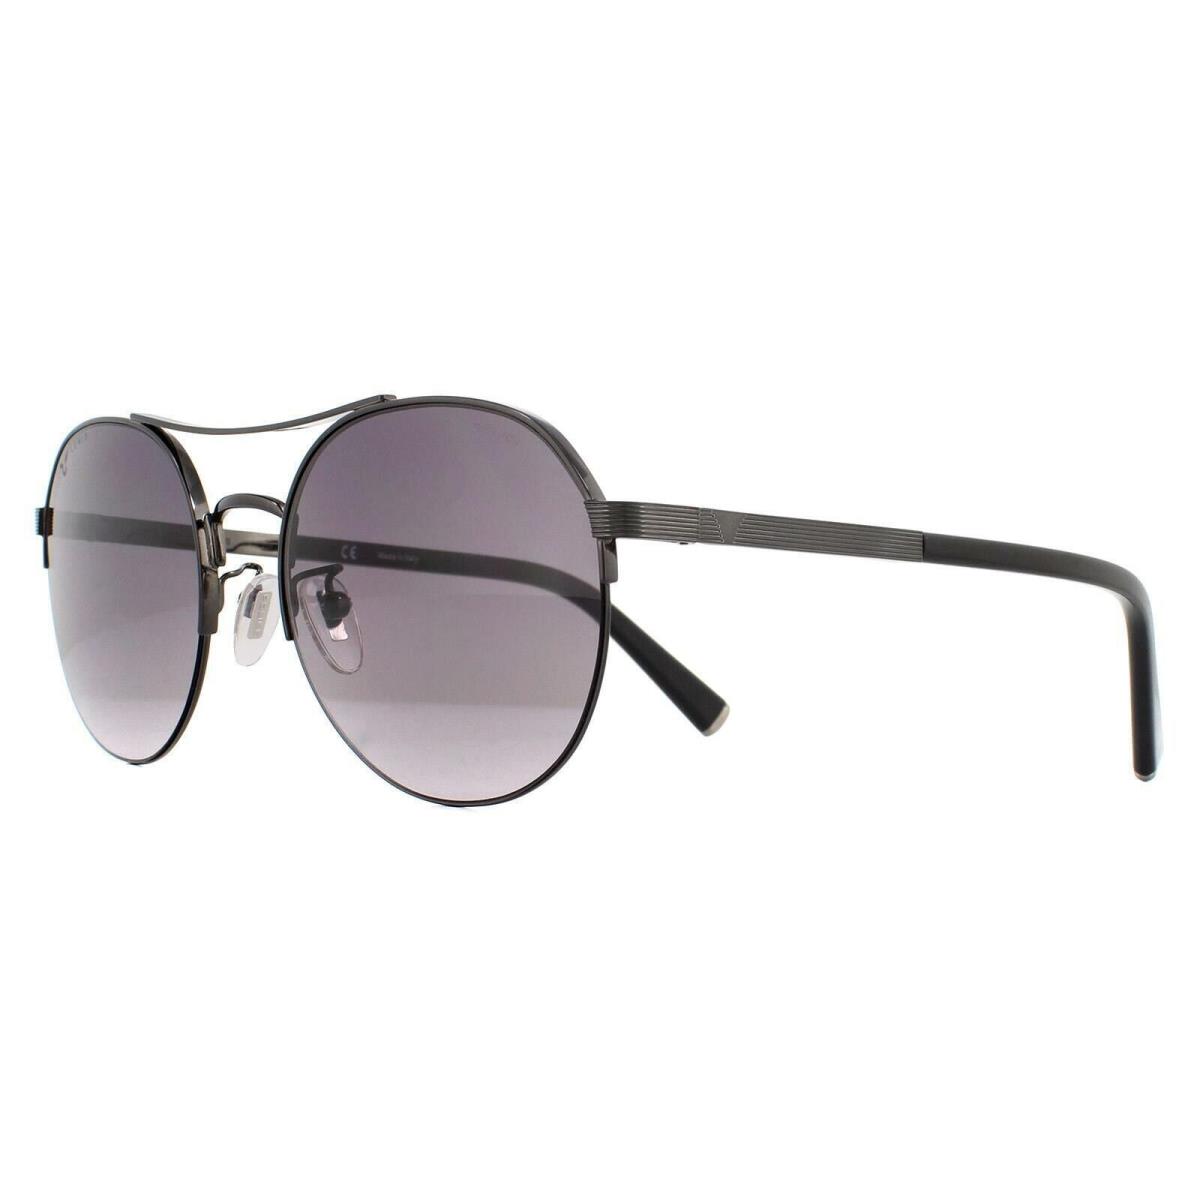 Police Lewis Hamilton Sunglasses Shiny Gunmetal Frame W/ Grey Gradient Lens